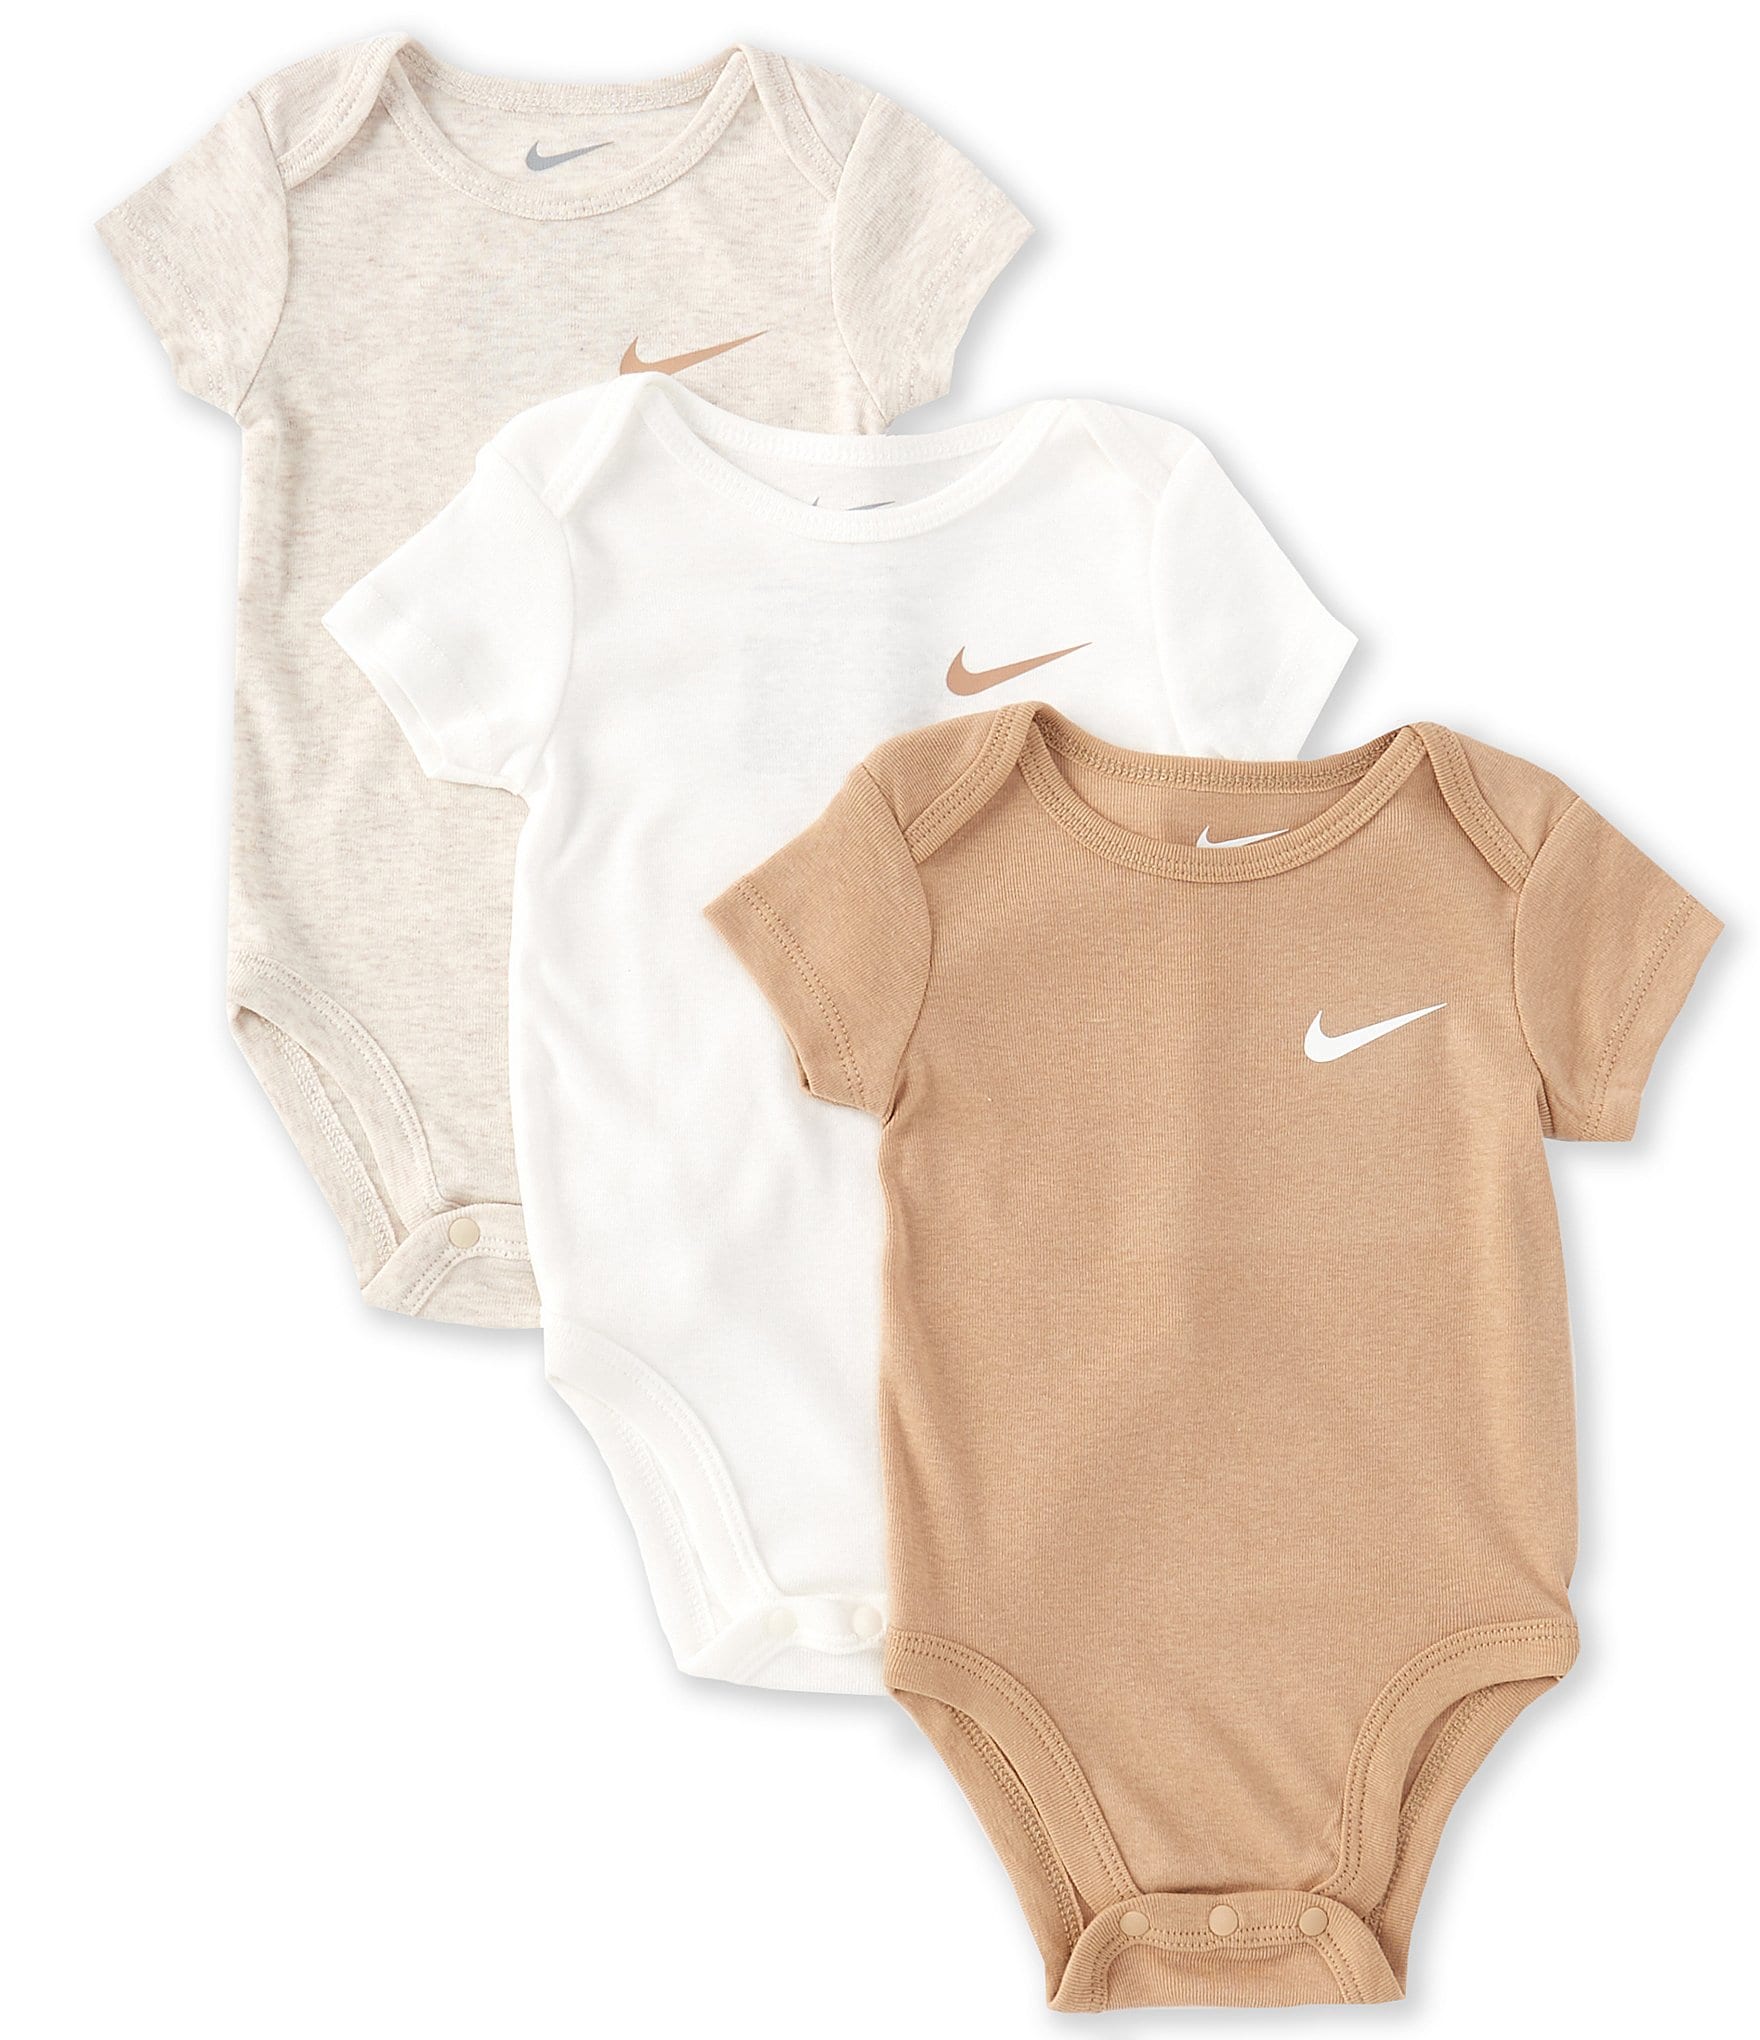 Sobriquette room Onhandig Nike Baby Newborn-9 Months Short Sleeve Bodysuit Set 3-Pack | Dillard's